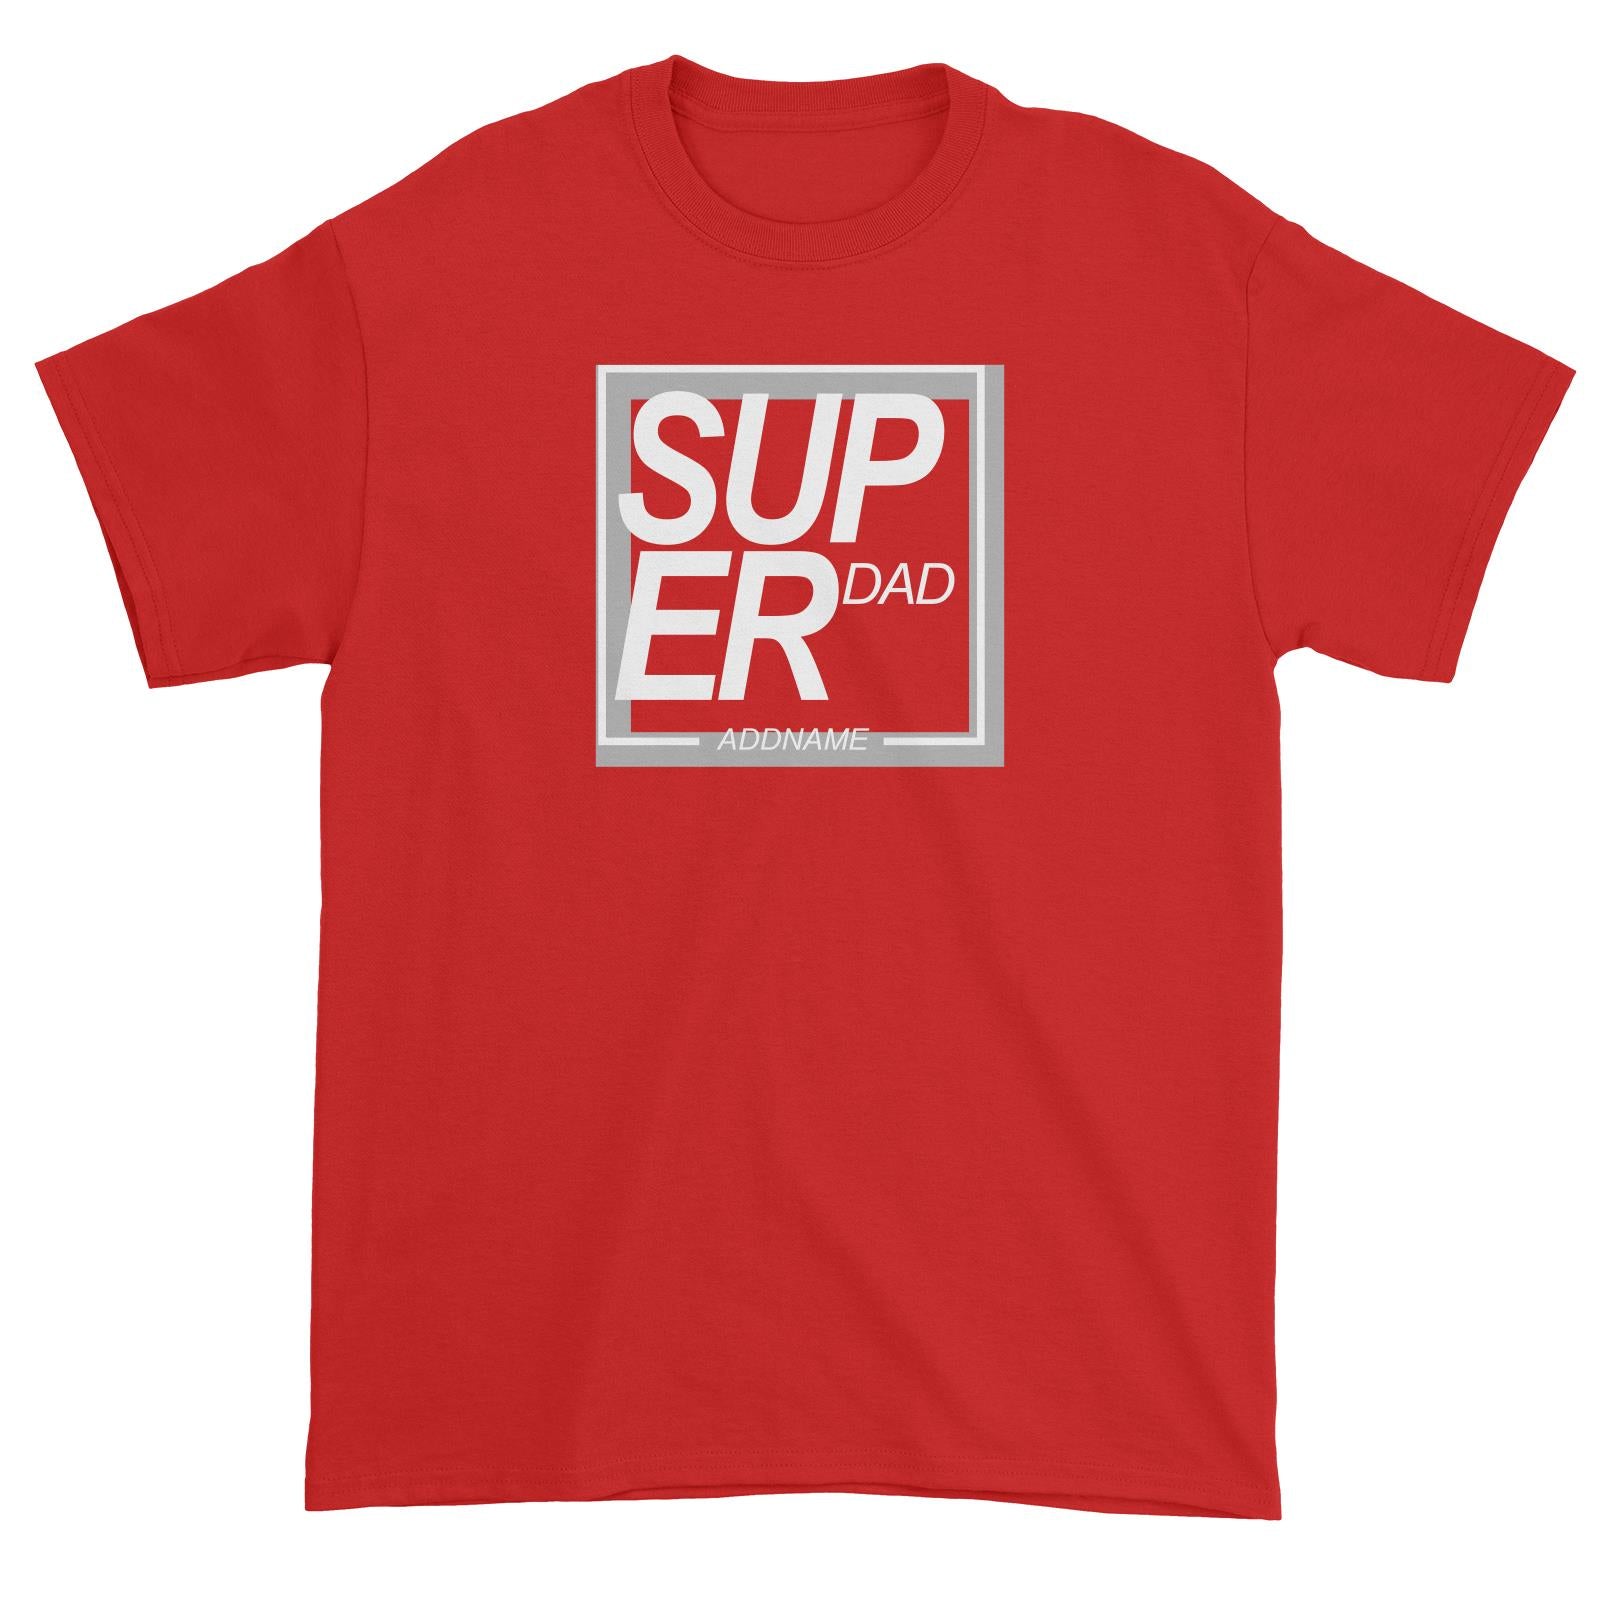 Super Box Family Super Dad Addname Unisex T-Shirt